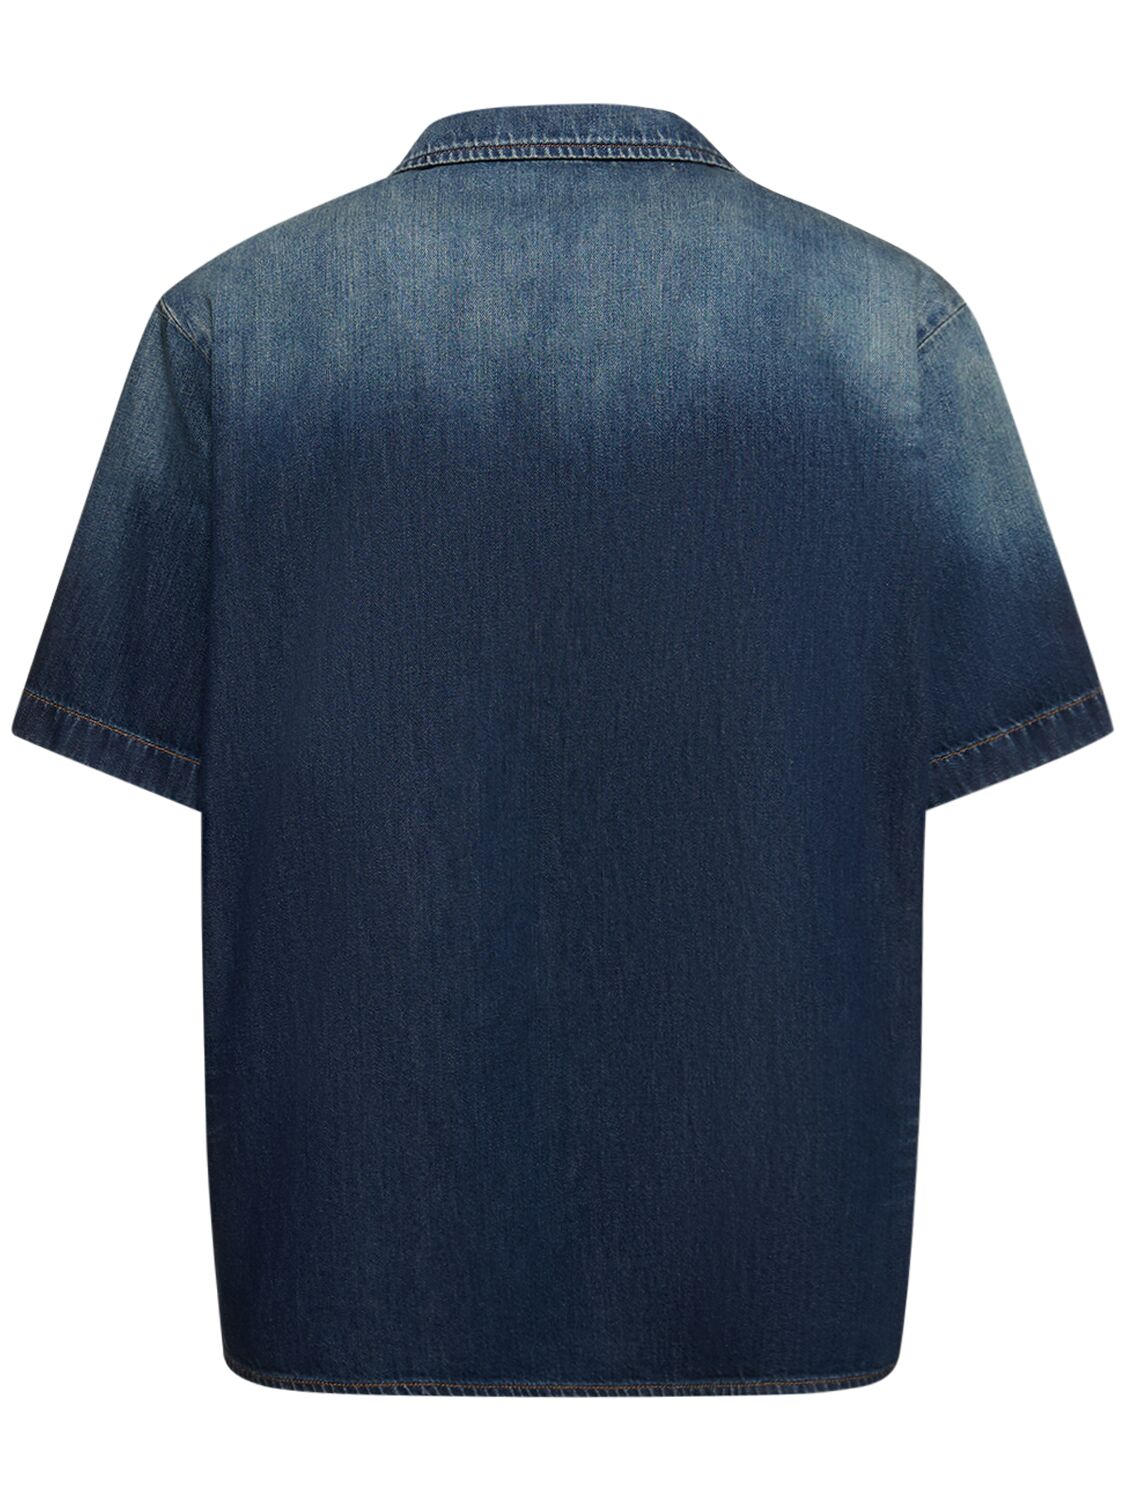 Shop Valentino Denim Short Sleeve Shirt In Blue